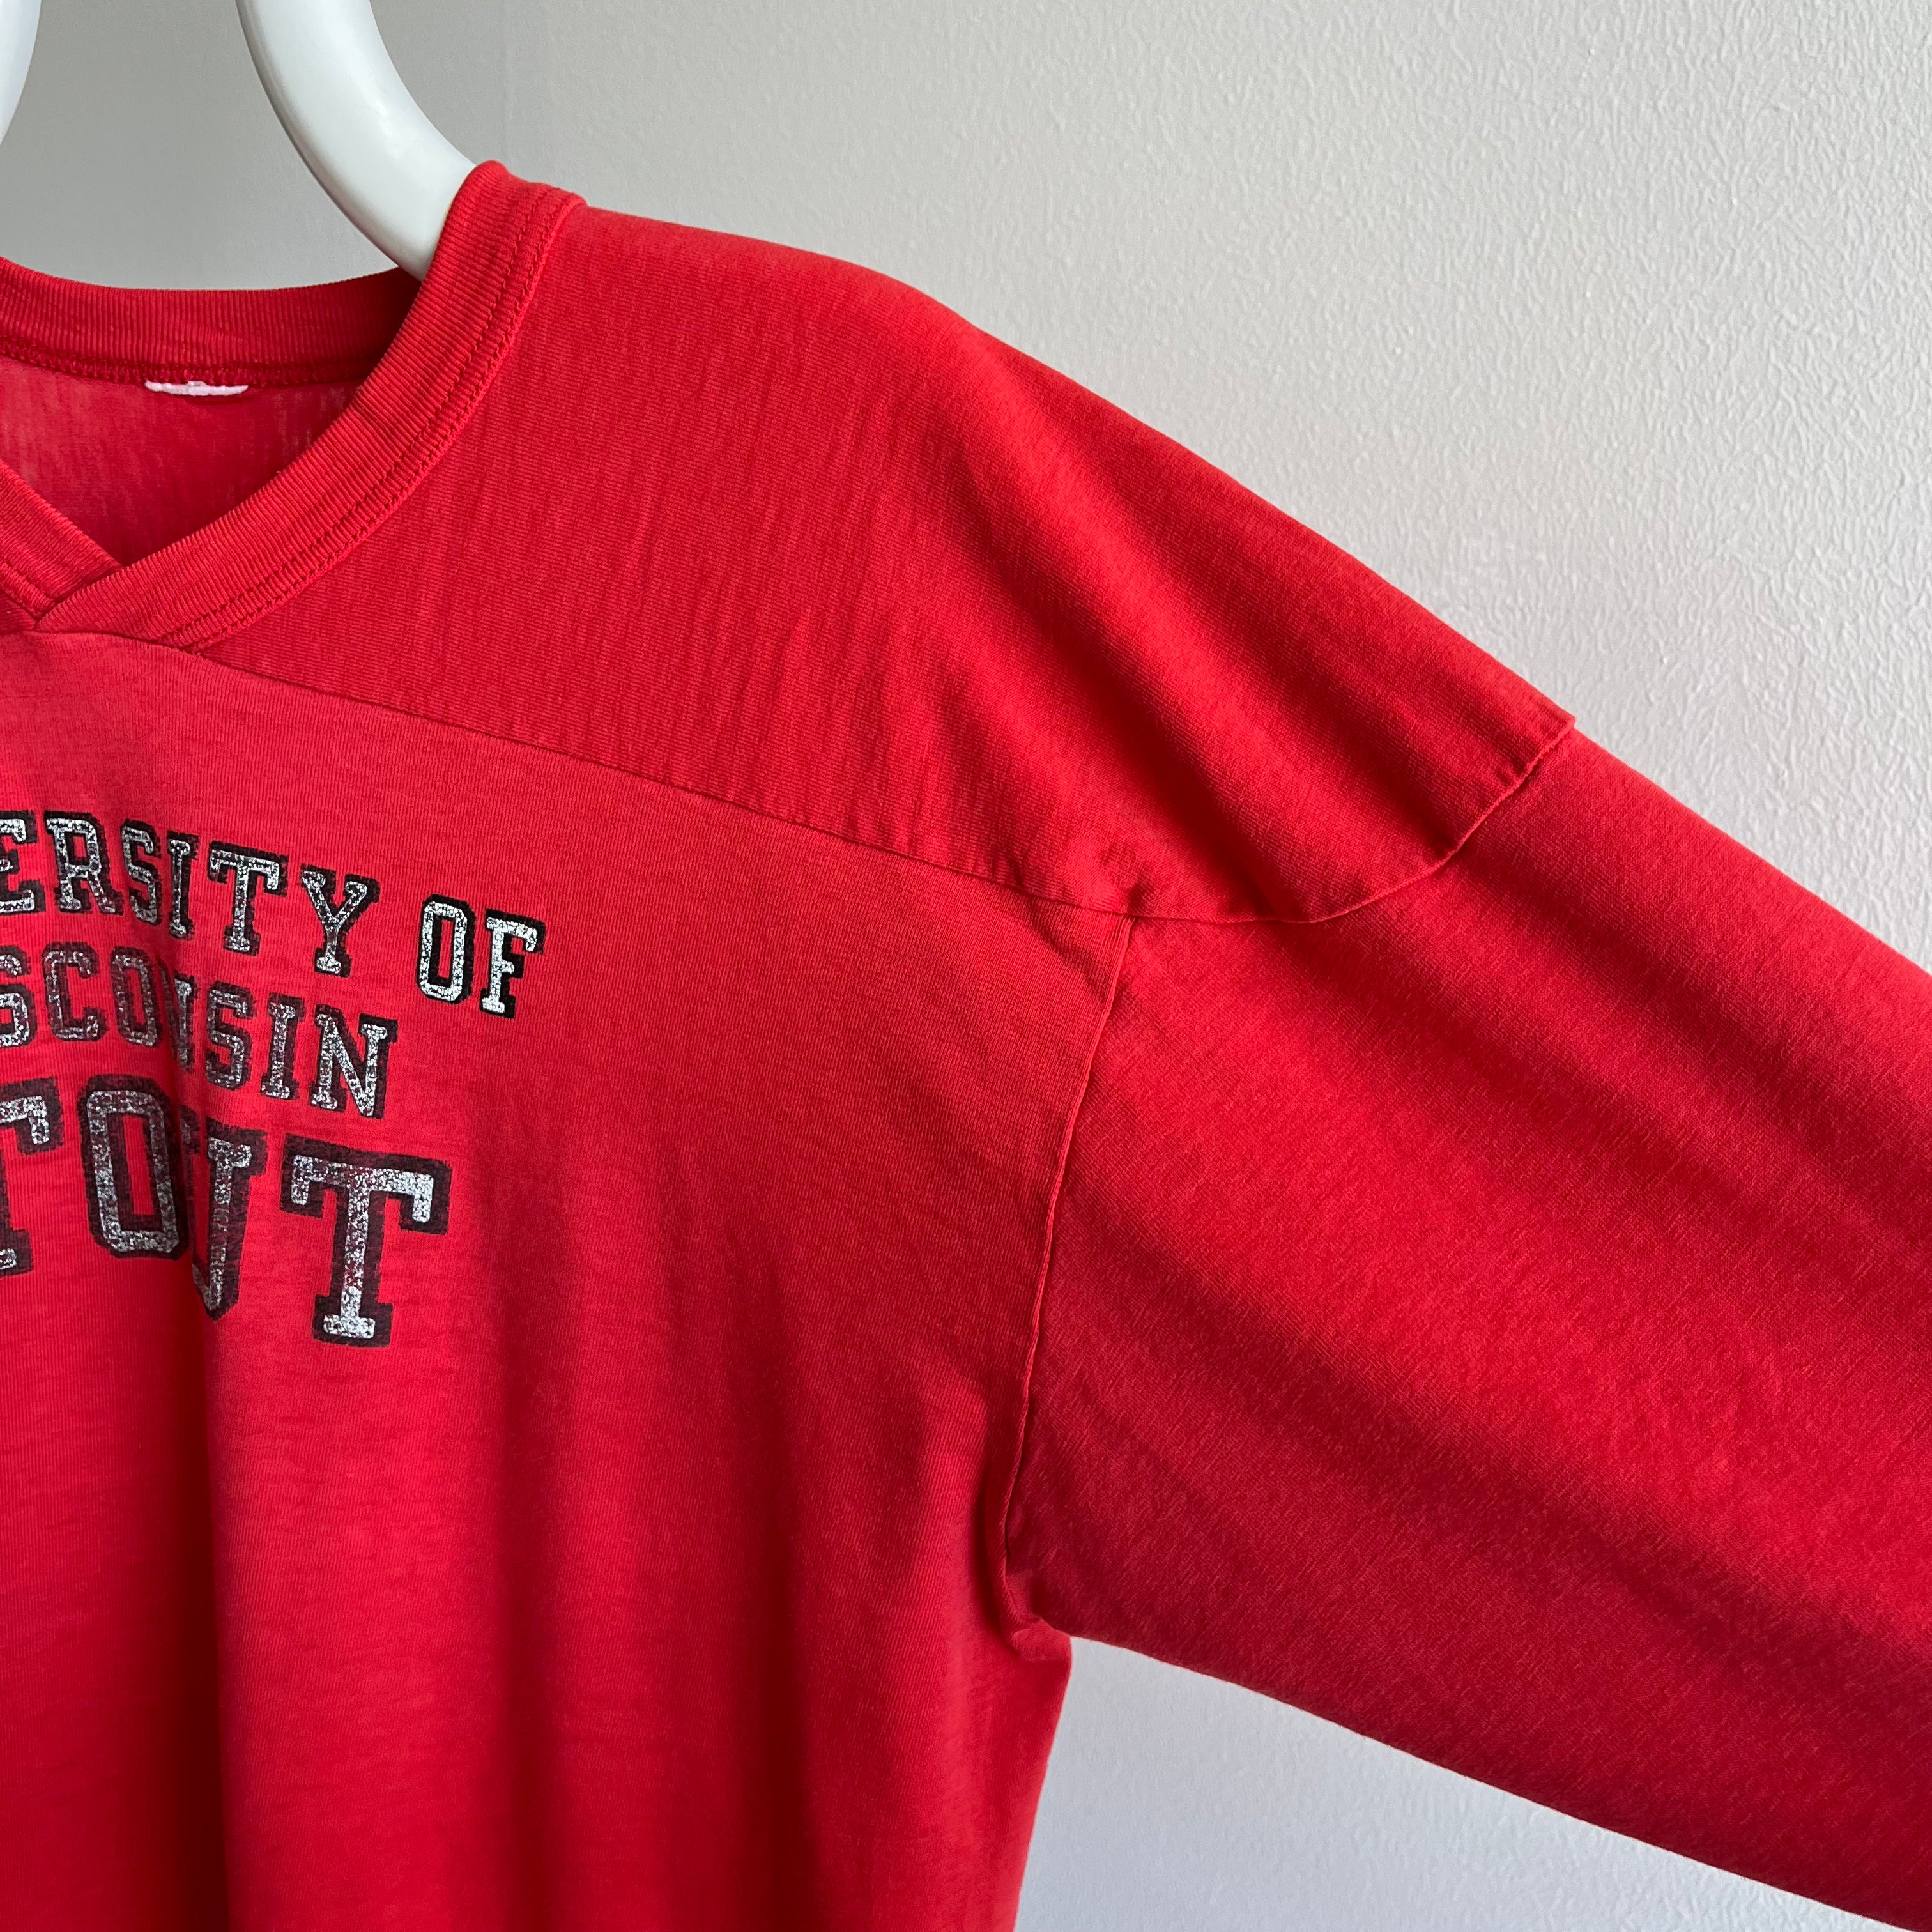 1970s Champion Brand University of Wisconsin Stout Super Soft Football Shirt